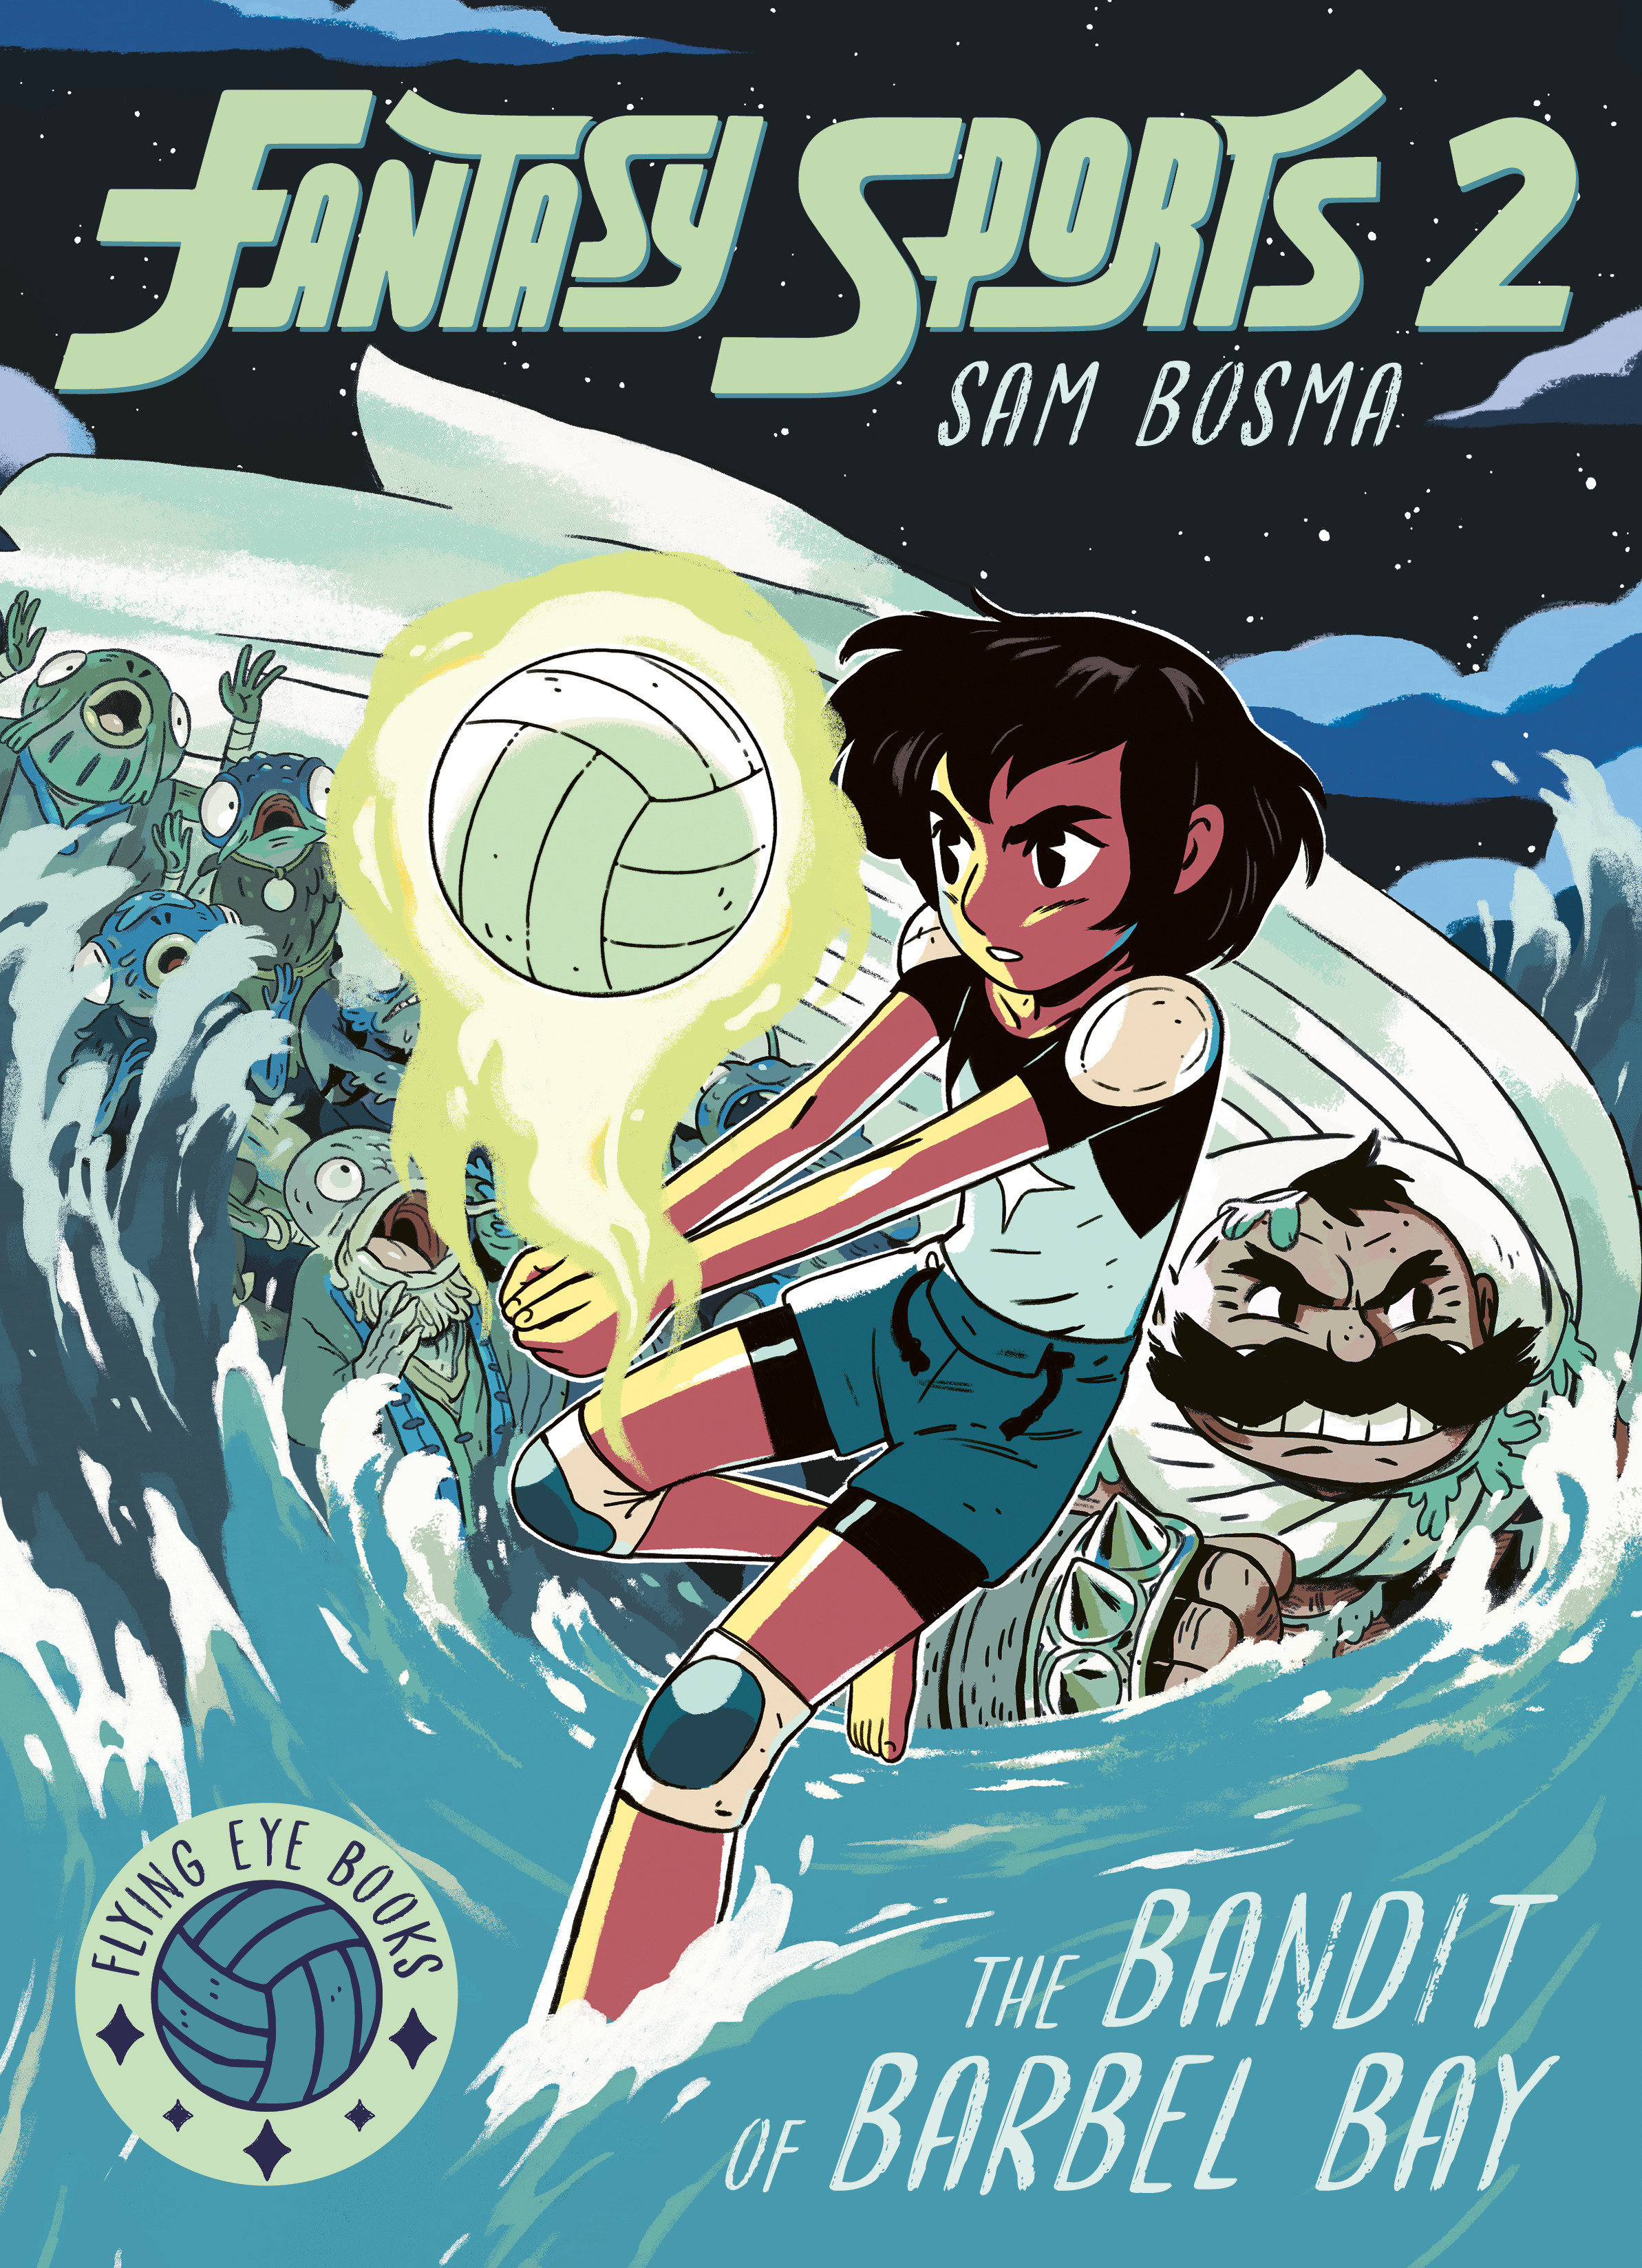 Fantasy Sports Graphic Novel Volume 2 The Bandit of Barbel Bay